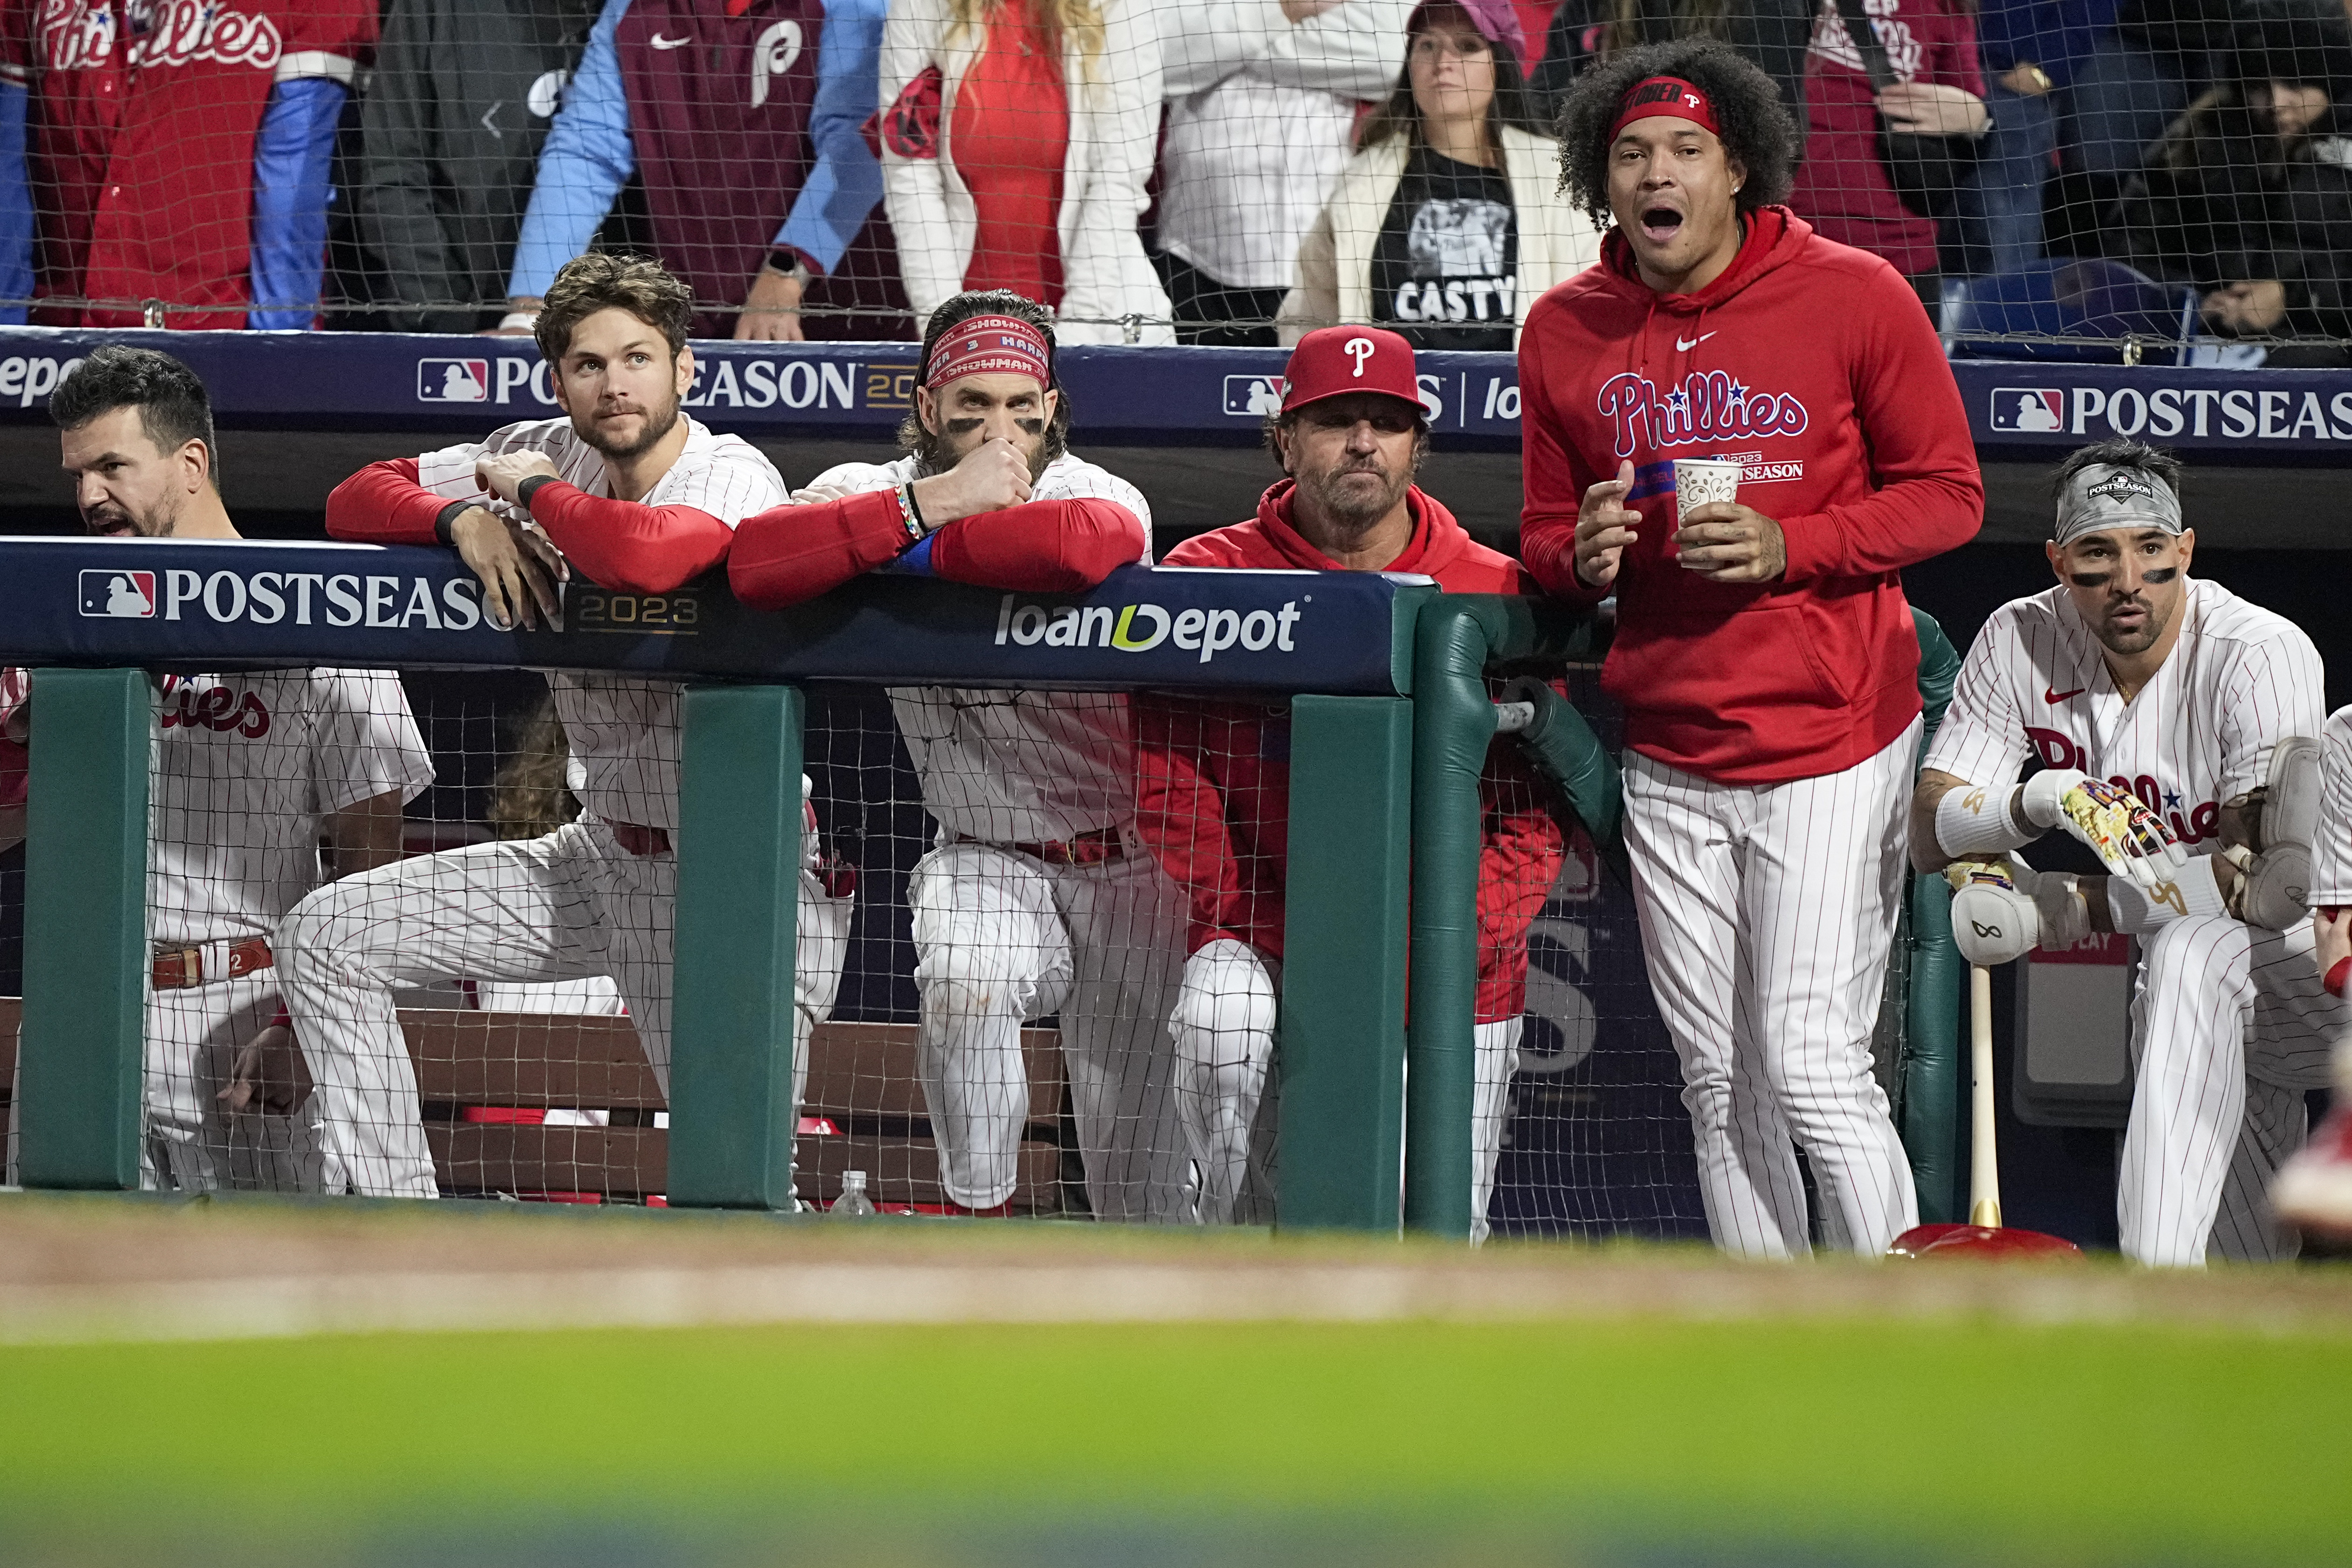 No, a Phillies World Series won't cause an economic downturn